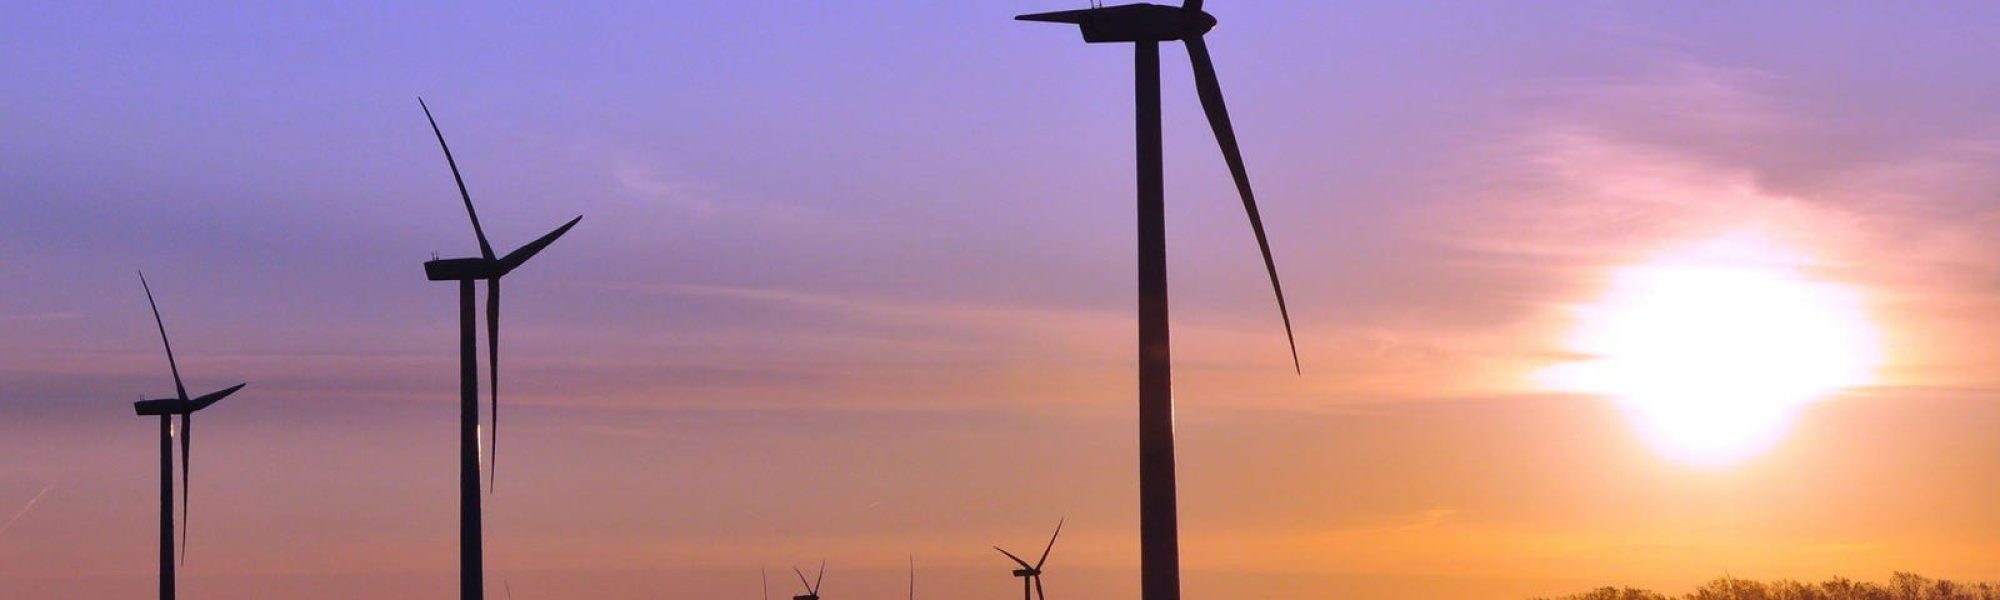 South Dakota regulators approve permit for wind turbine farm